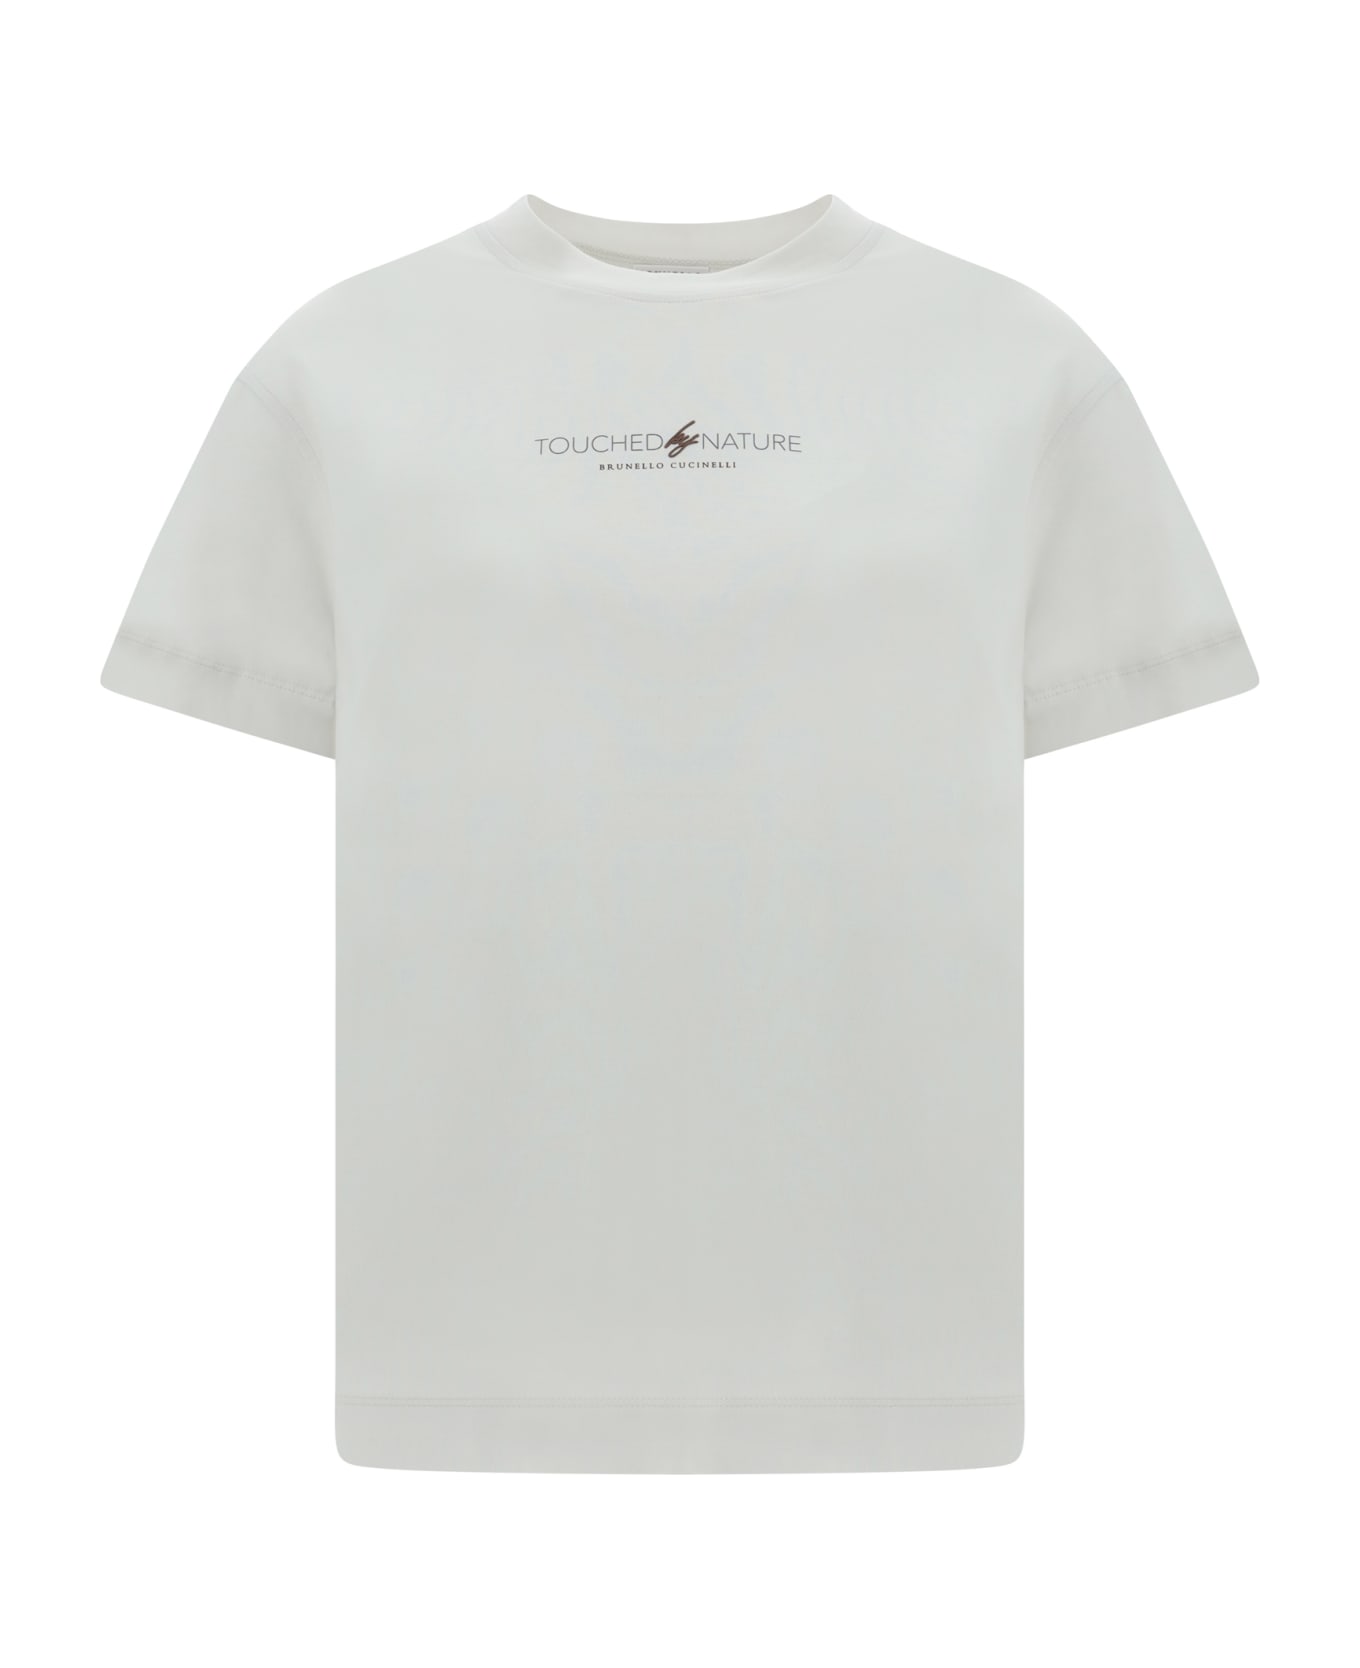 Brunello Cucinelli Touched Nature Logo T-shirt - Warm White